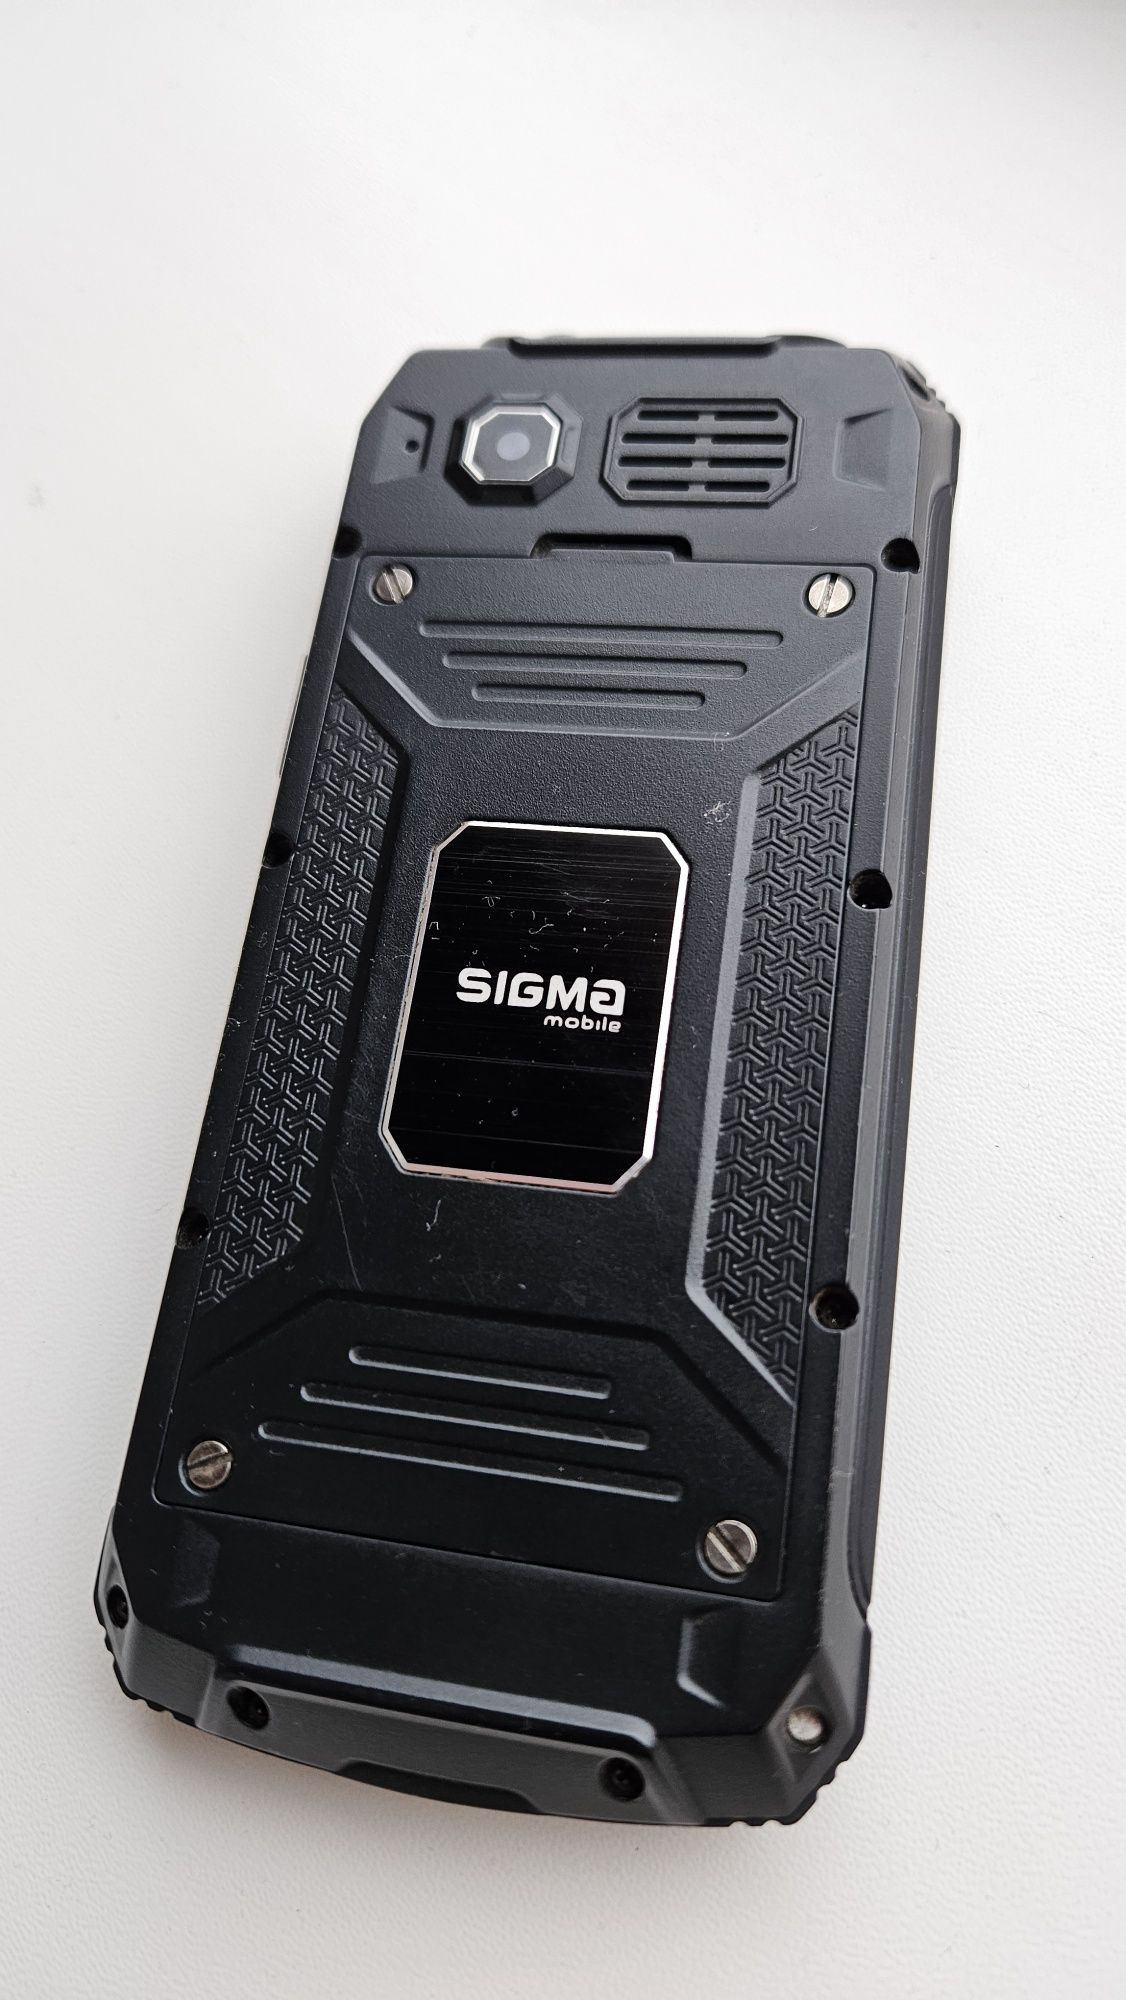 Телефон Sigma X-treme PR68